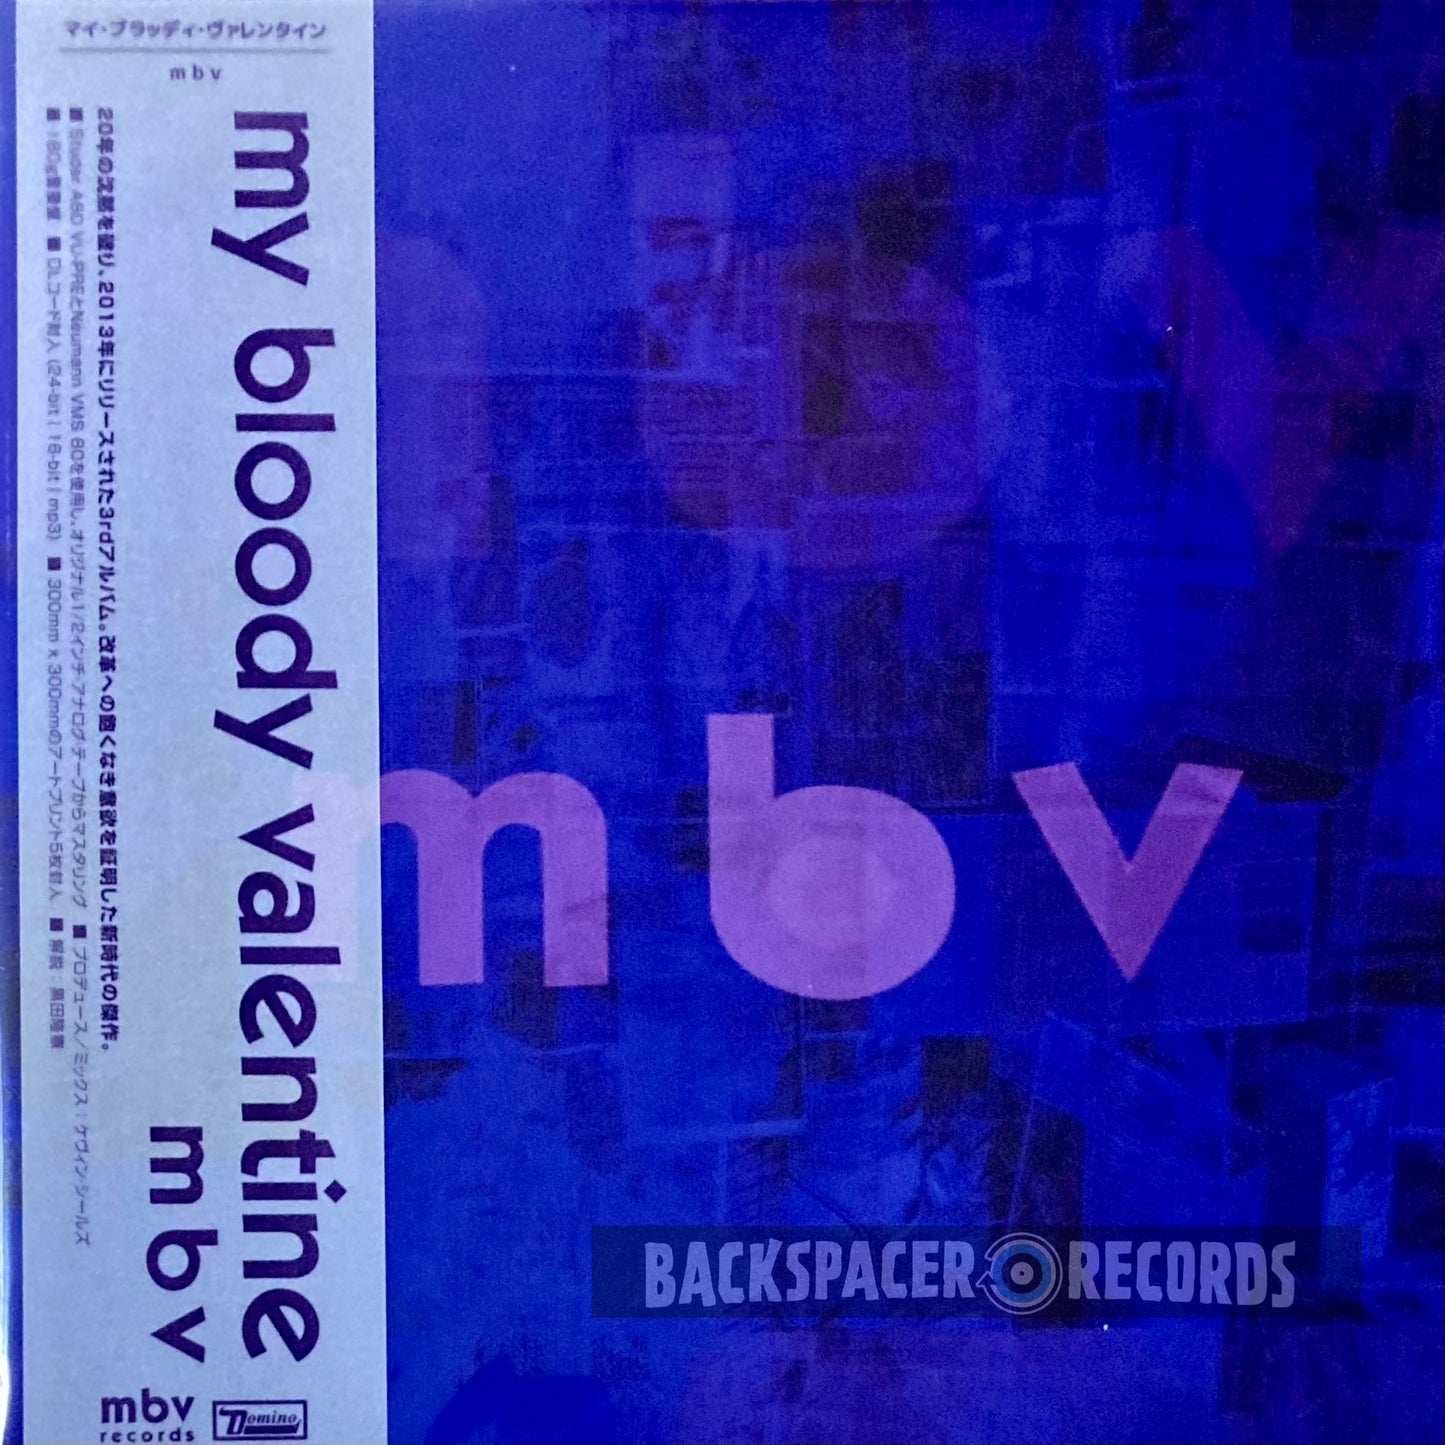 My Bloody Valentine – m b v LP (Japanese Edition)